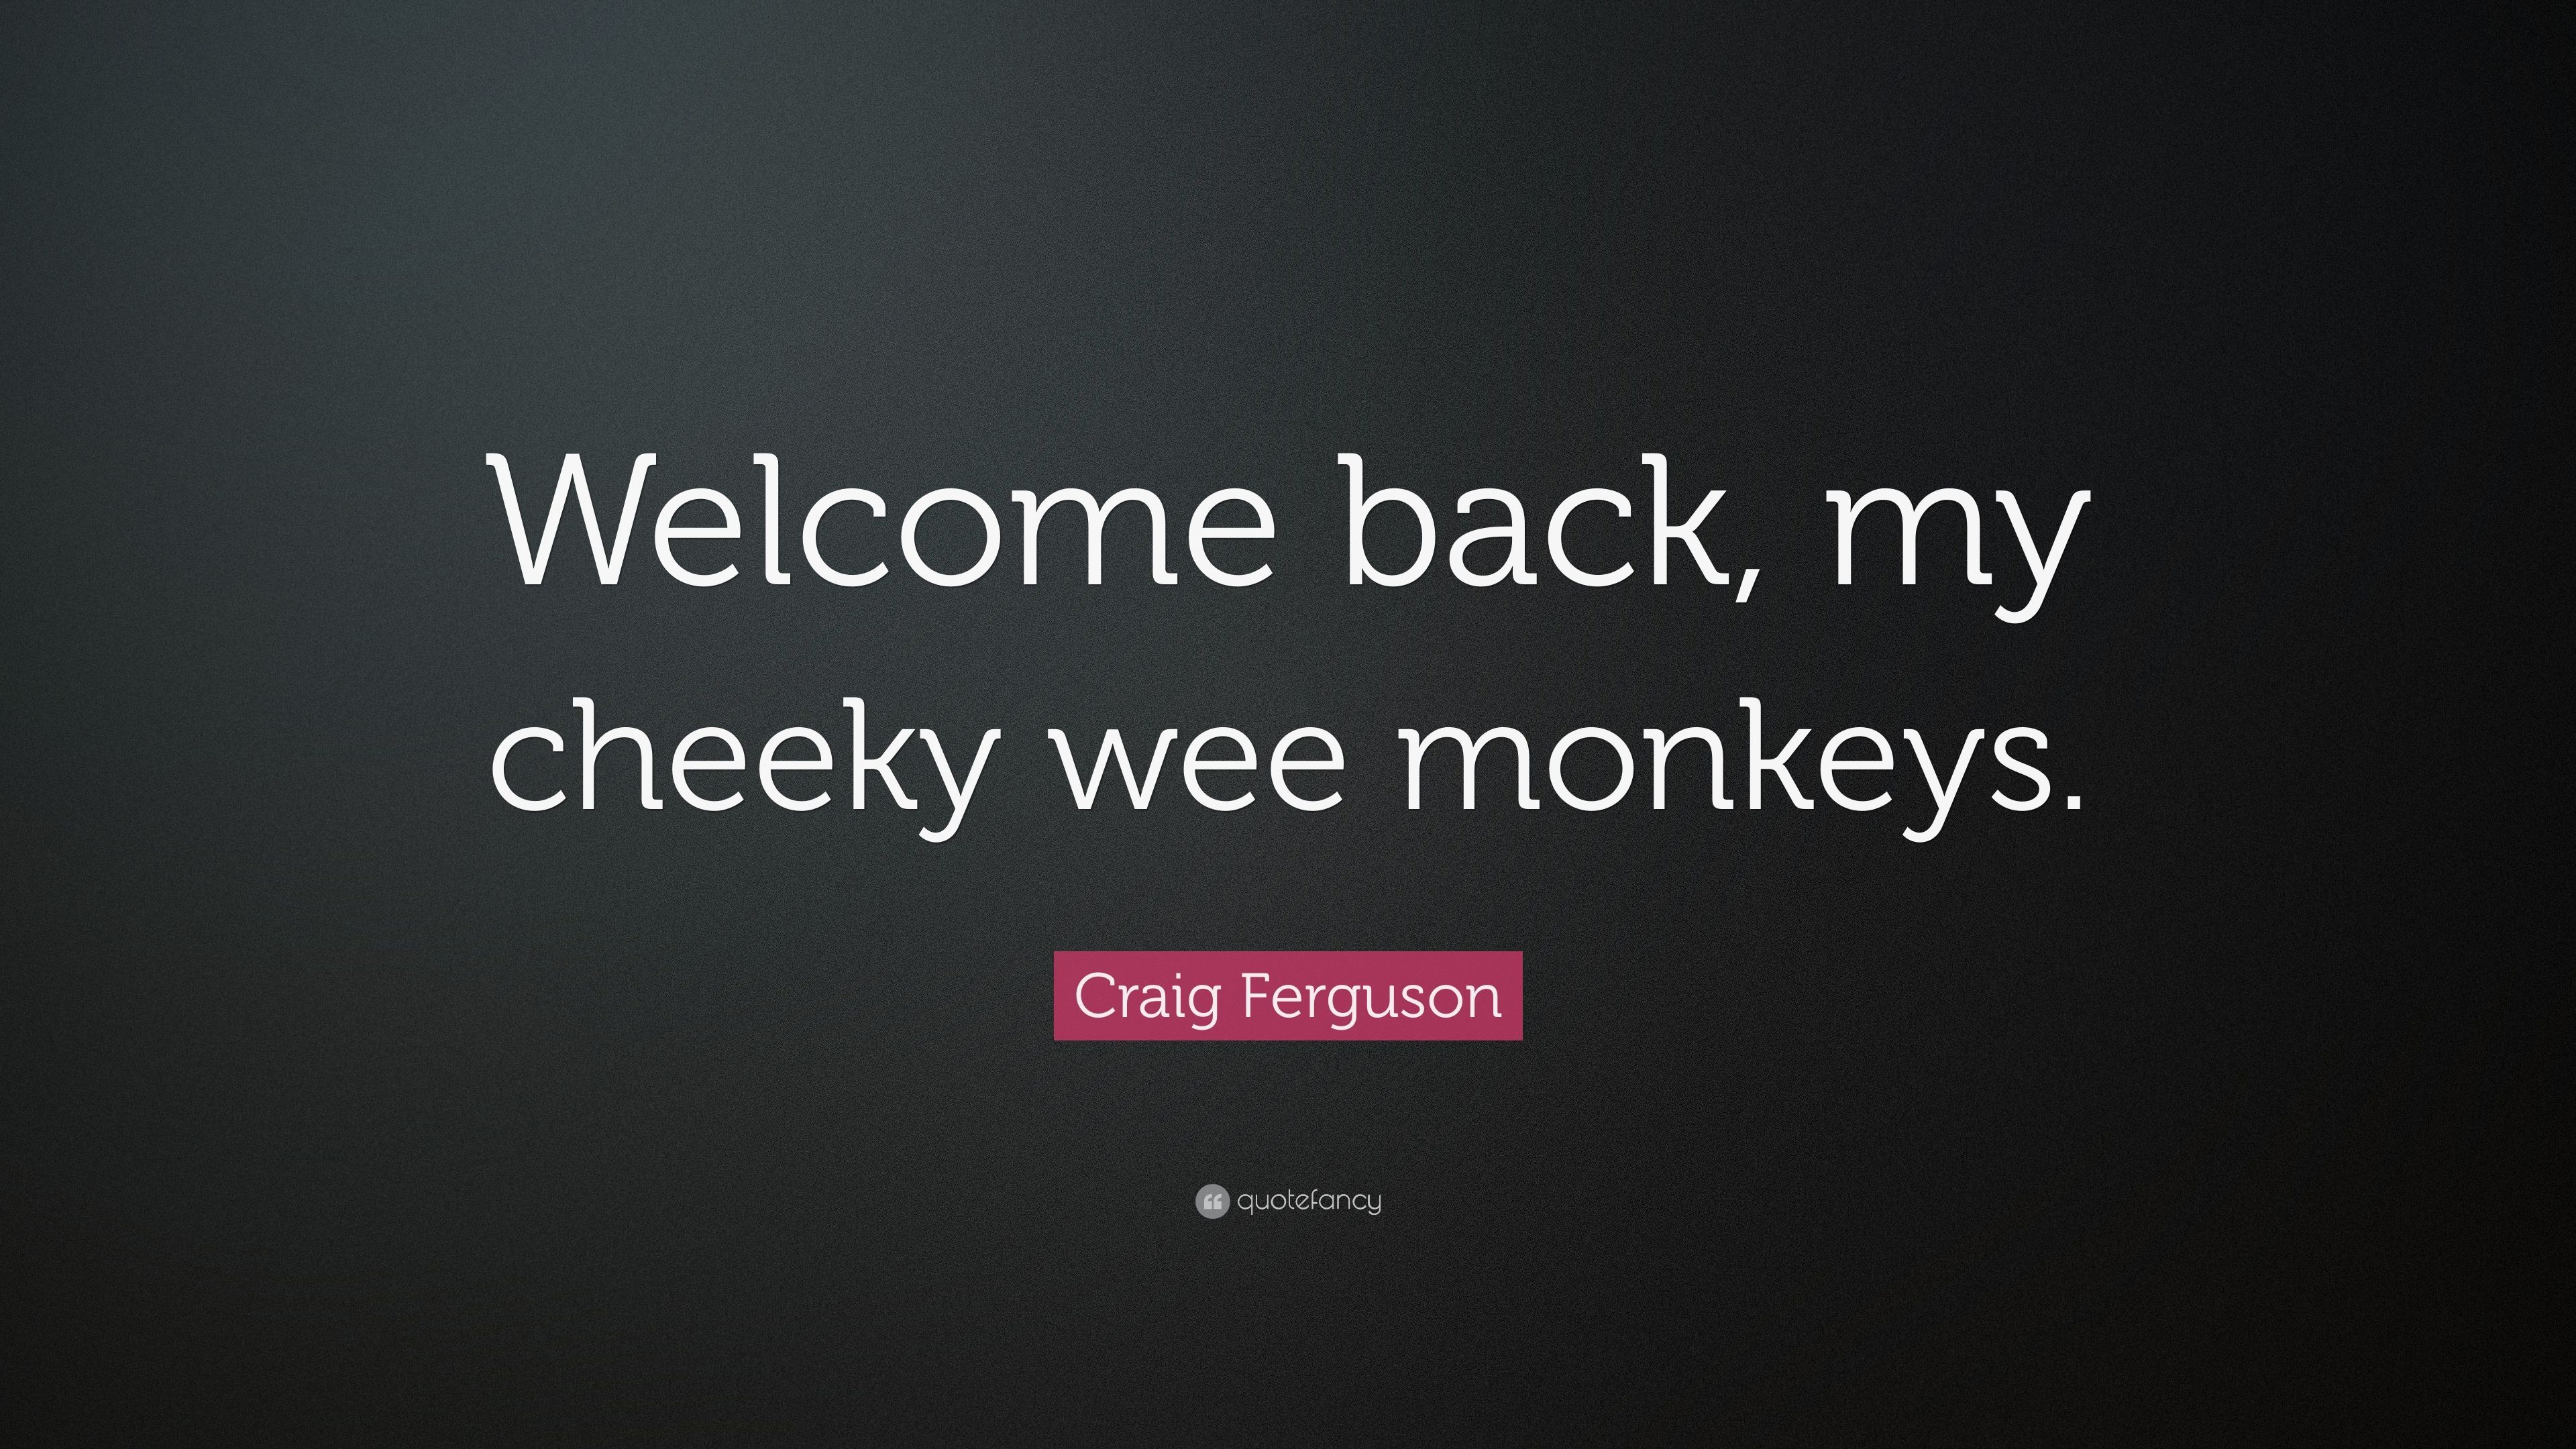 Craig Ferguson Quote: “Welcome back, my cheeky wee monkeys.” (6 wallpaper)